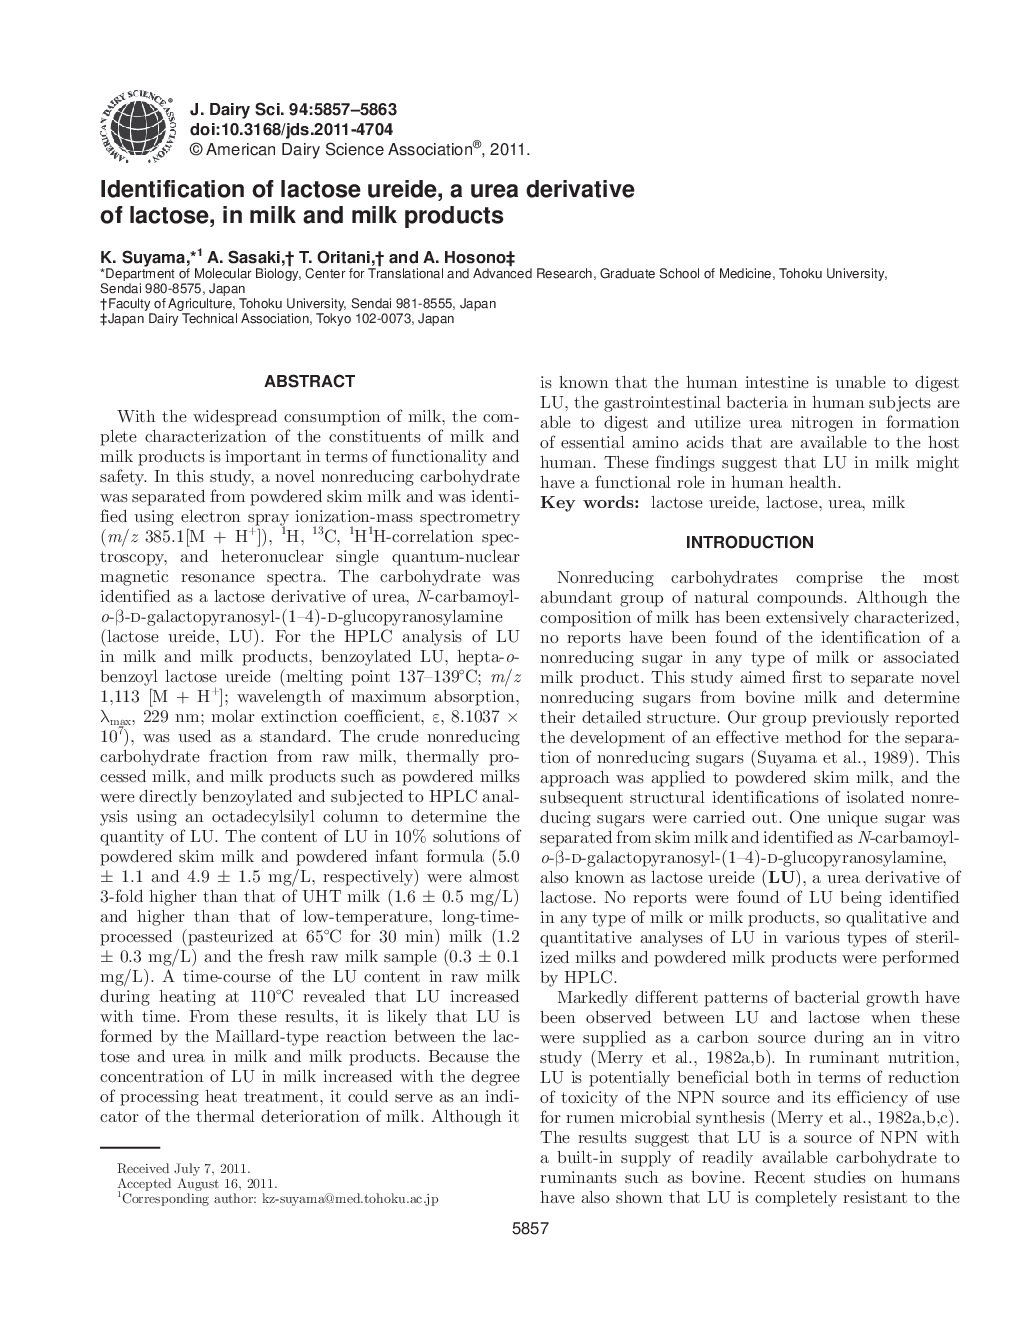 Identification of lactose ureide, a urea derivative of lactose, in milk and milk products